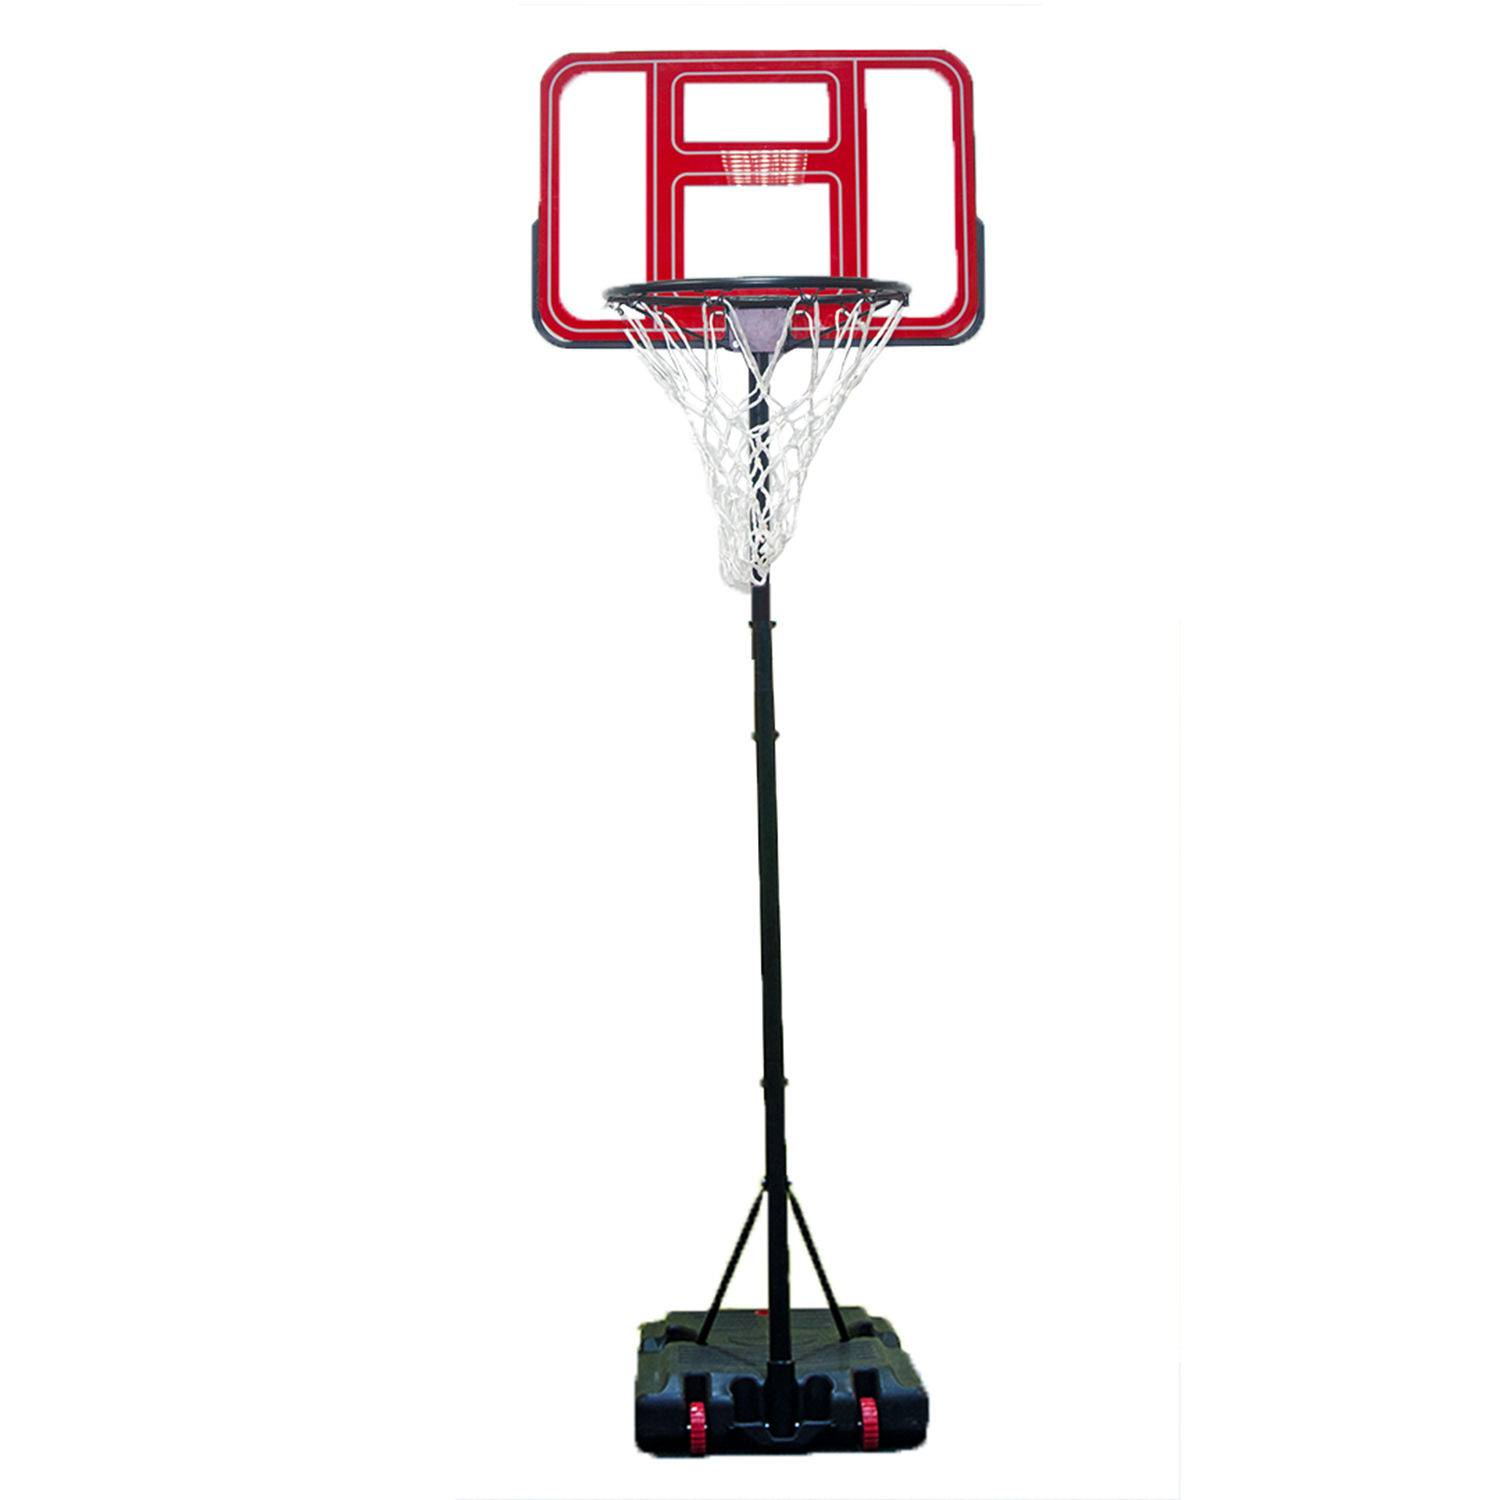 PC Portable Basketball Hoop System